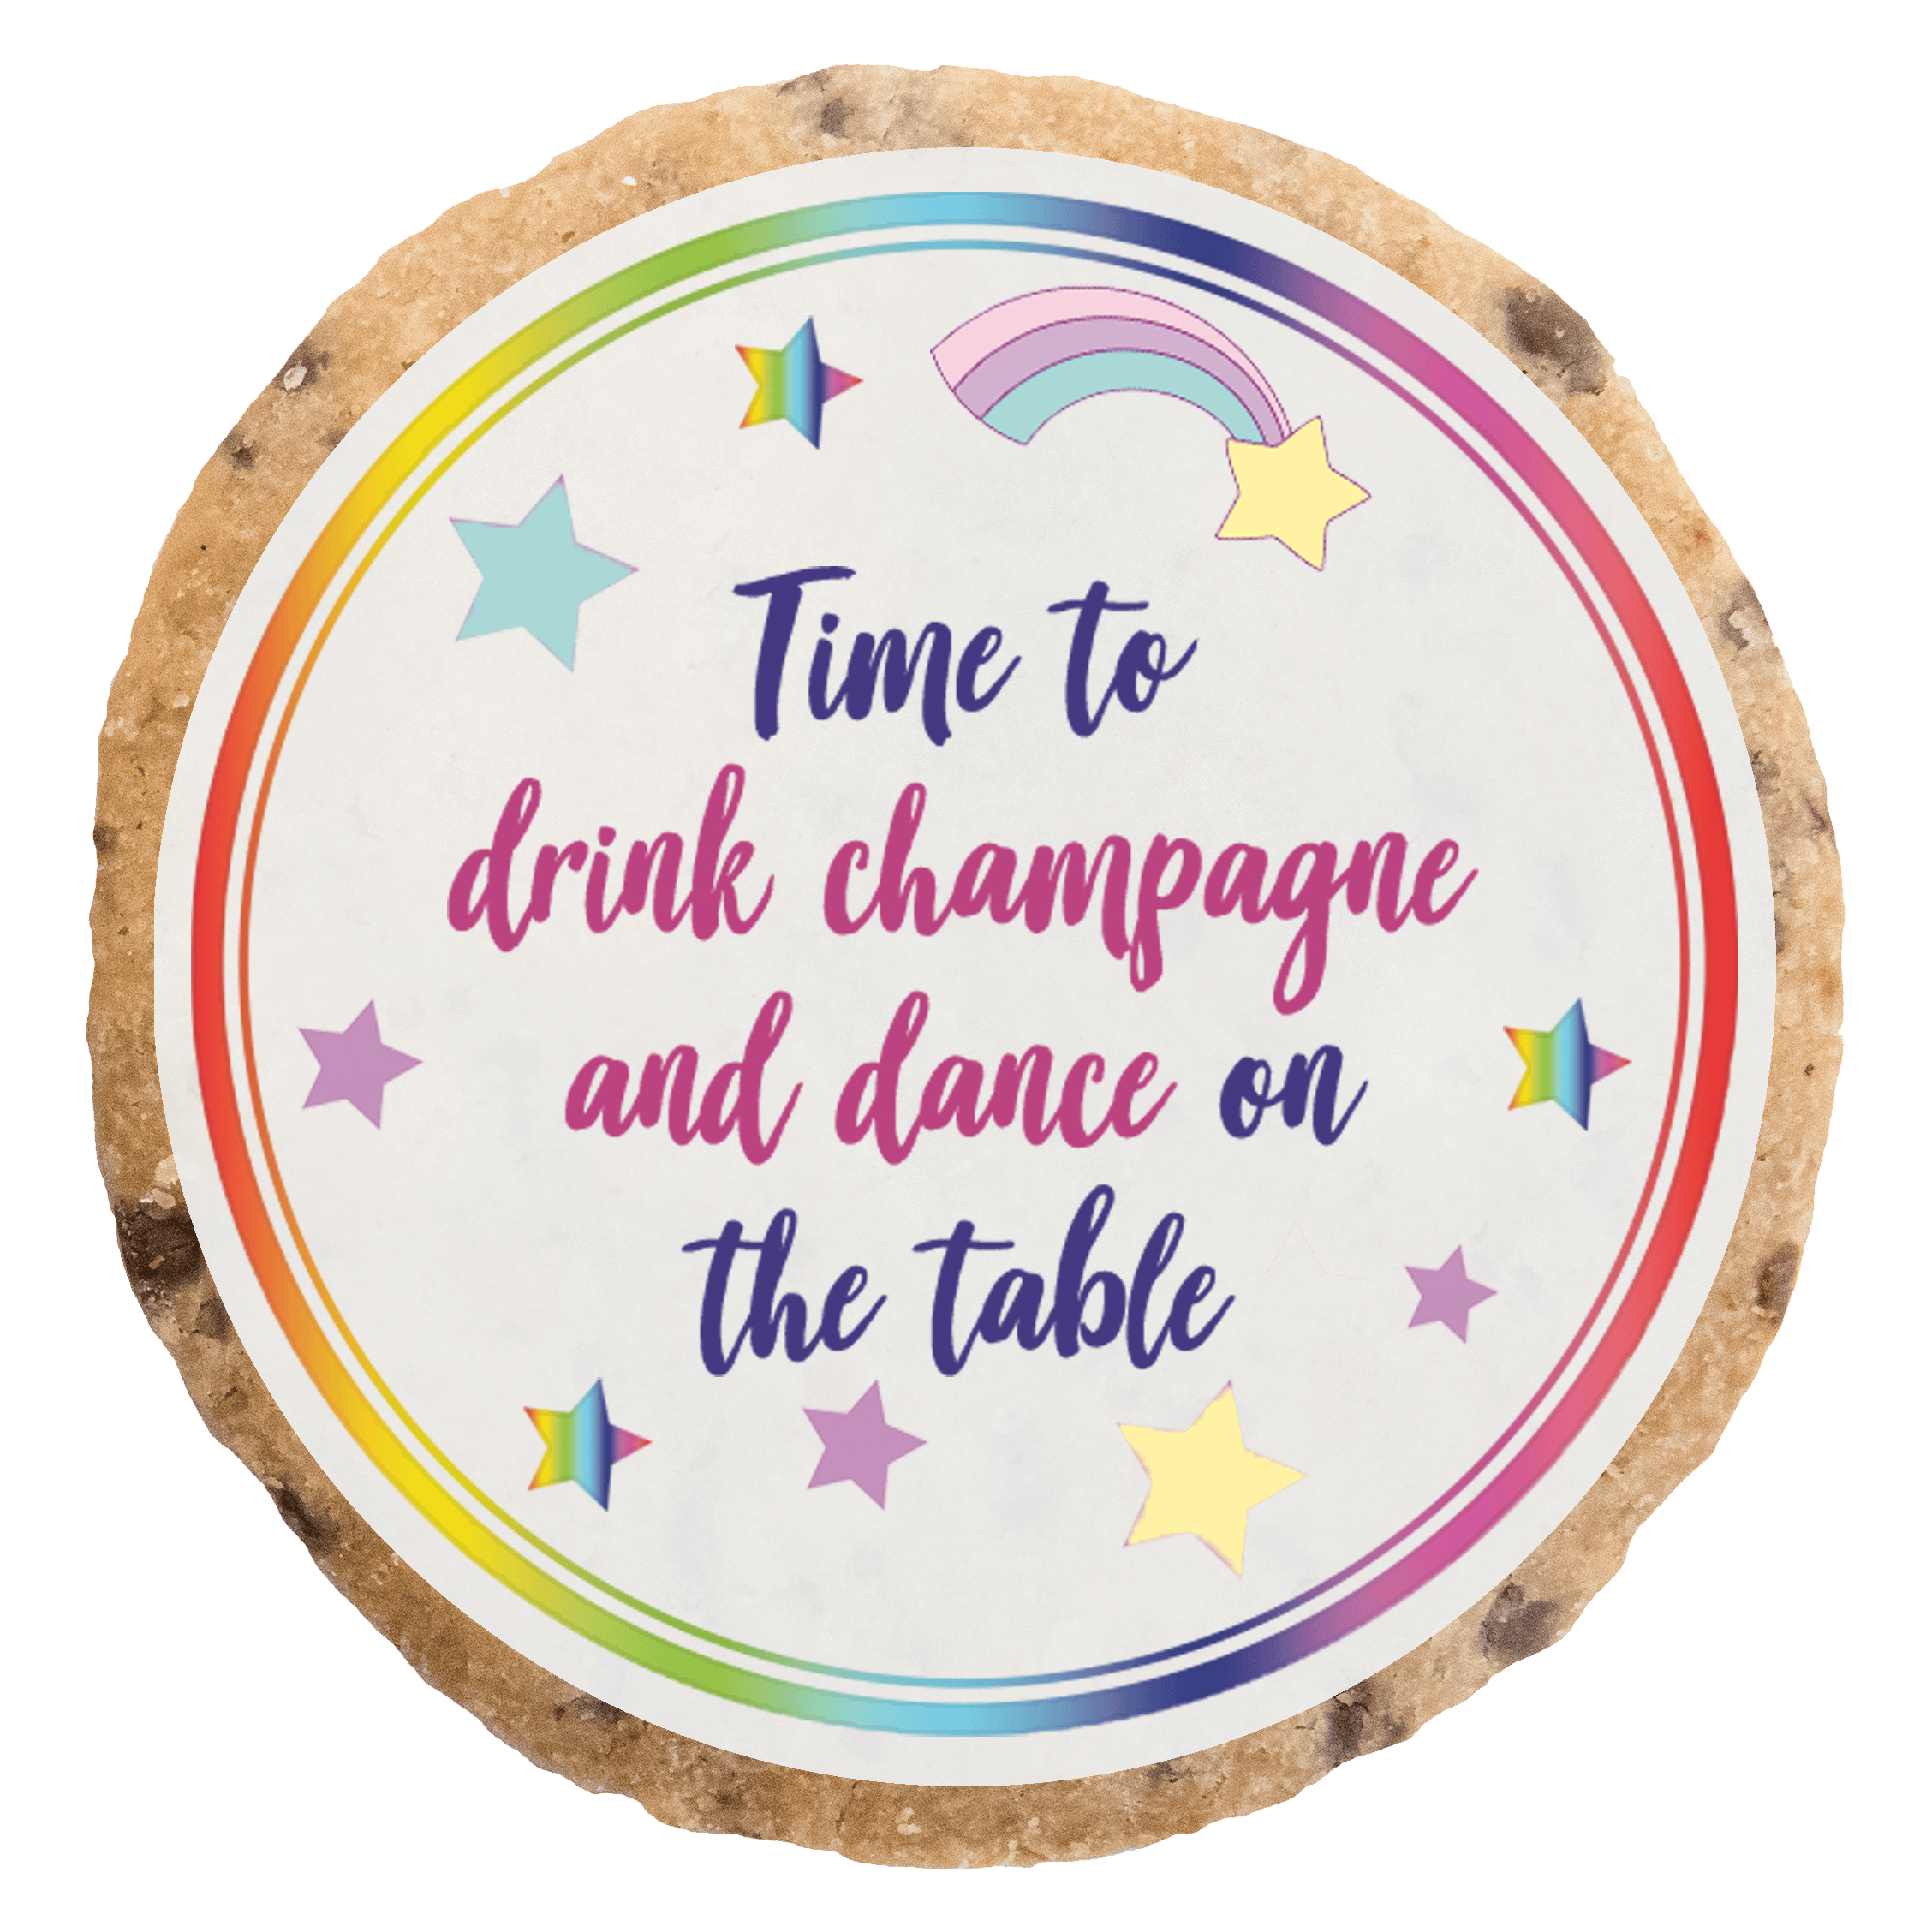 "Time to drink champagne" MotivKEKS